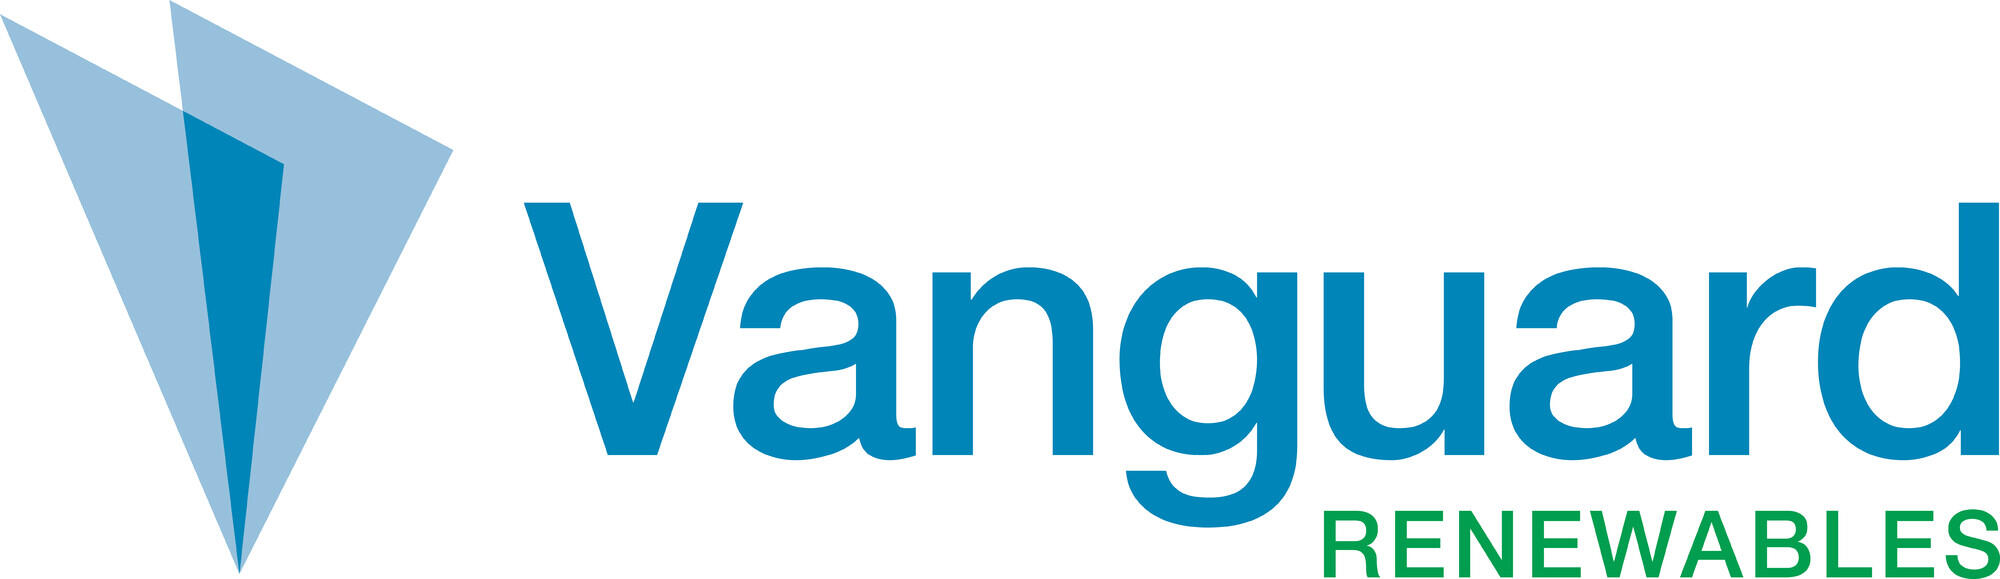 Vanguard Renewables logo